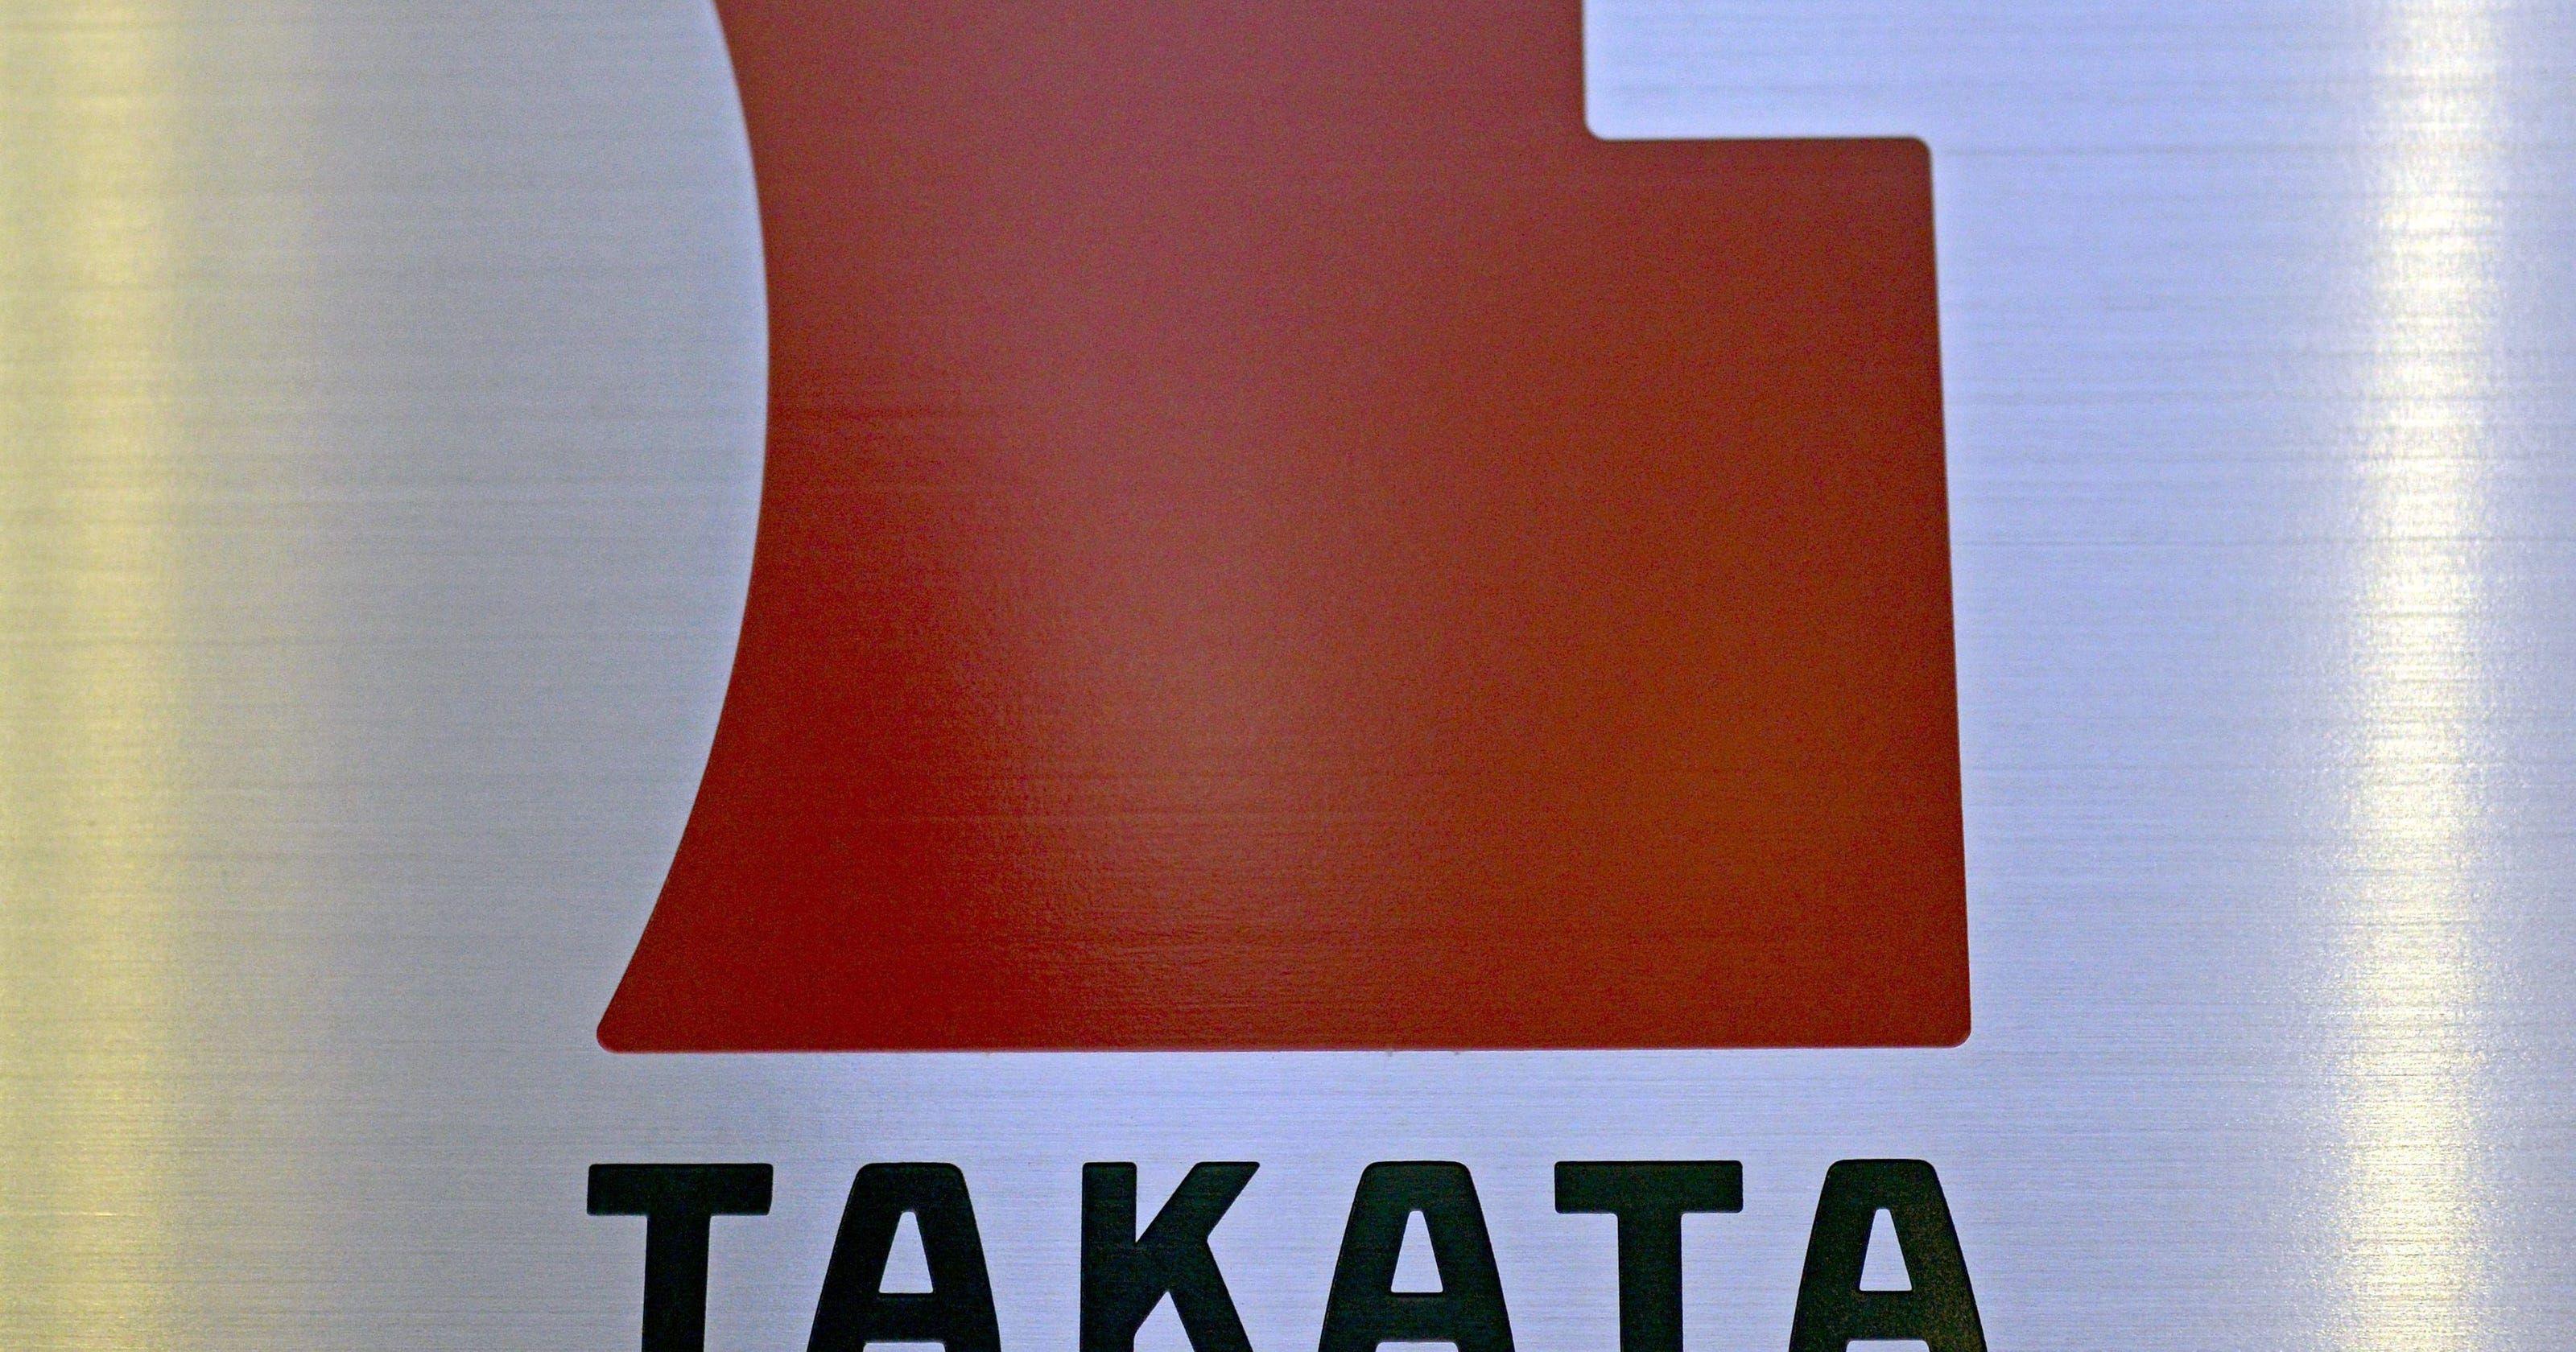 Takata Logo - Auto industry scrambles to react to massive Takata air bag recall